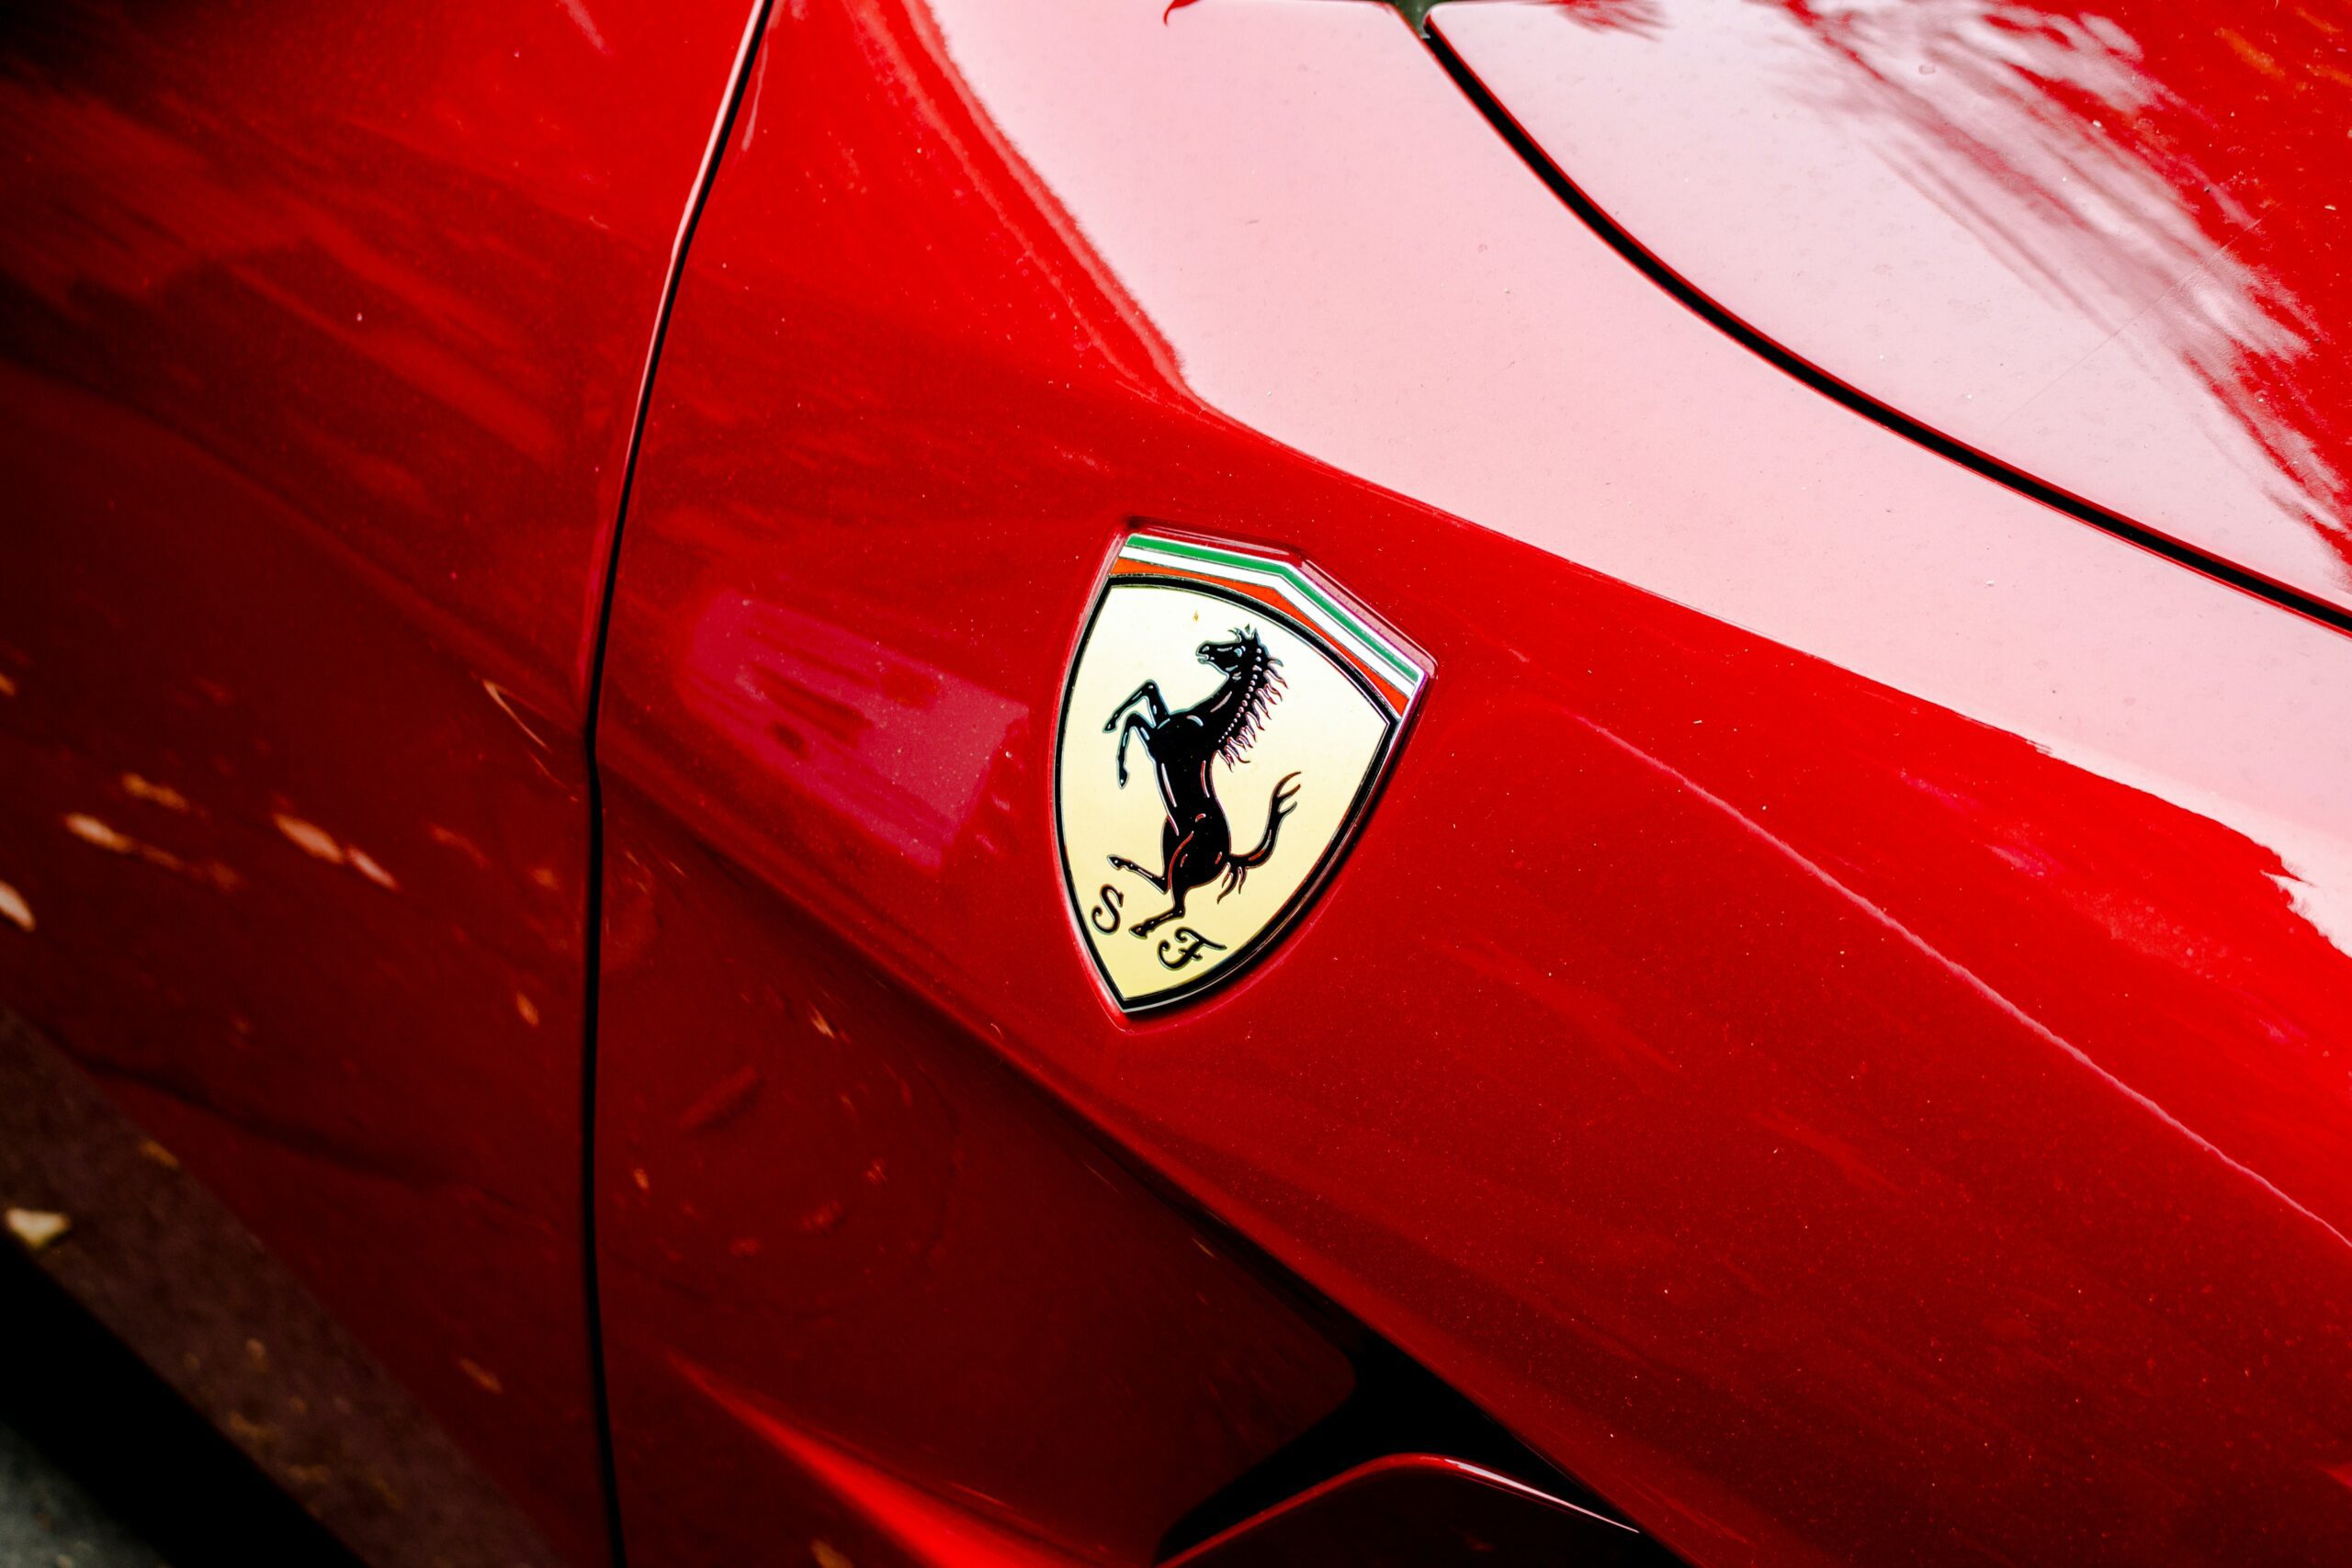 Sports Mind Powered by Mercedes Benz Racing Decal sticker emblem logo RED